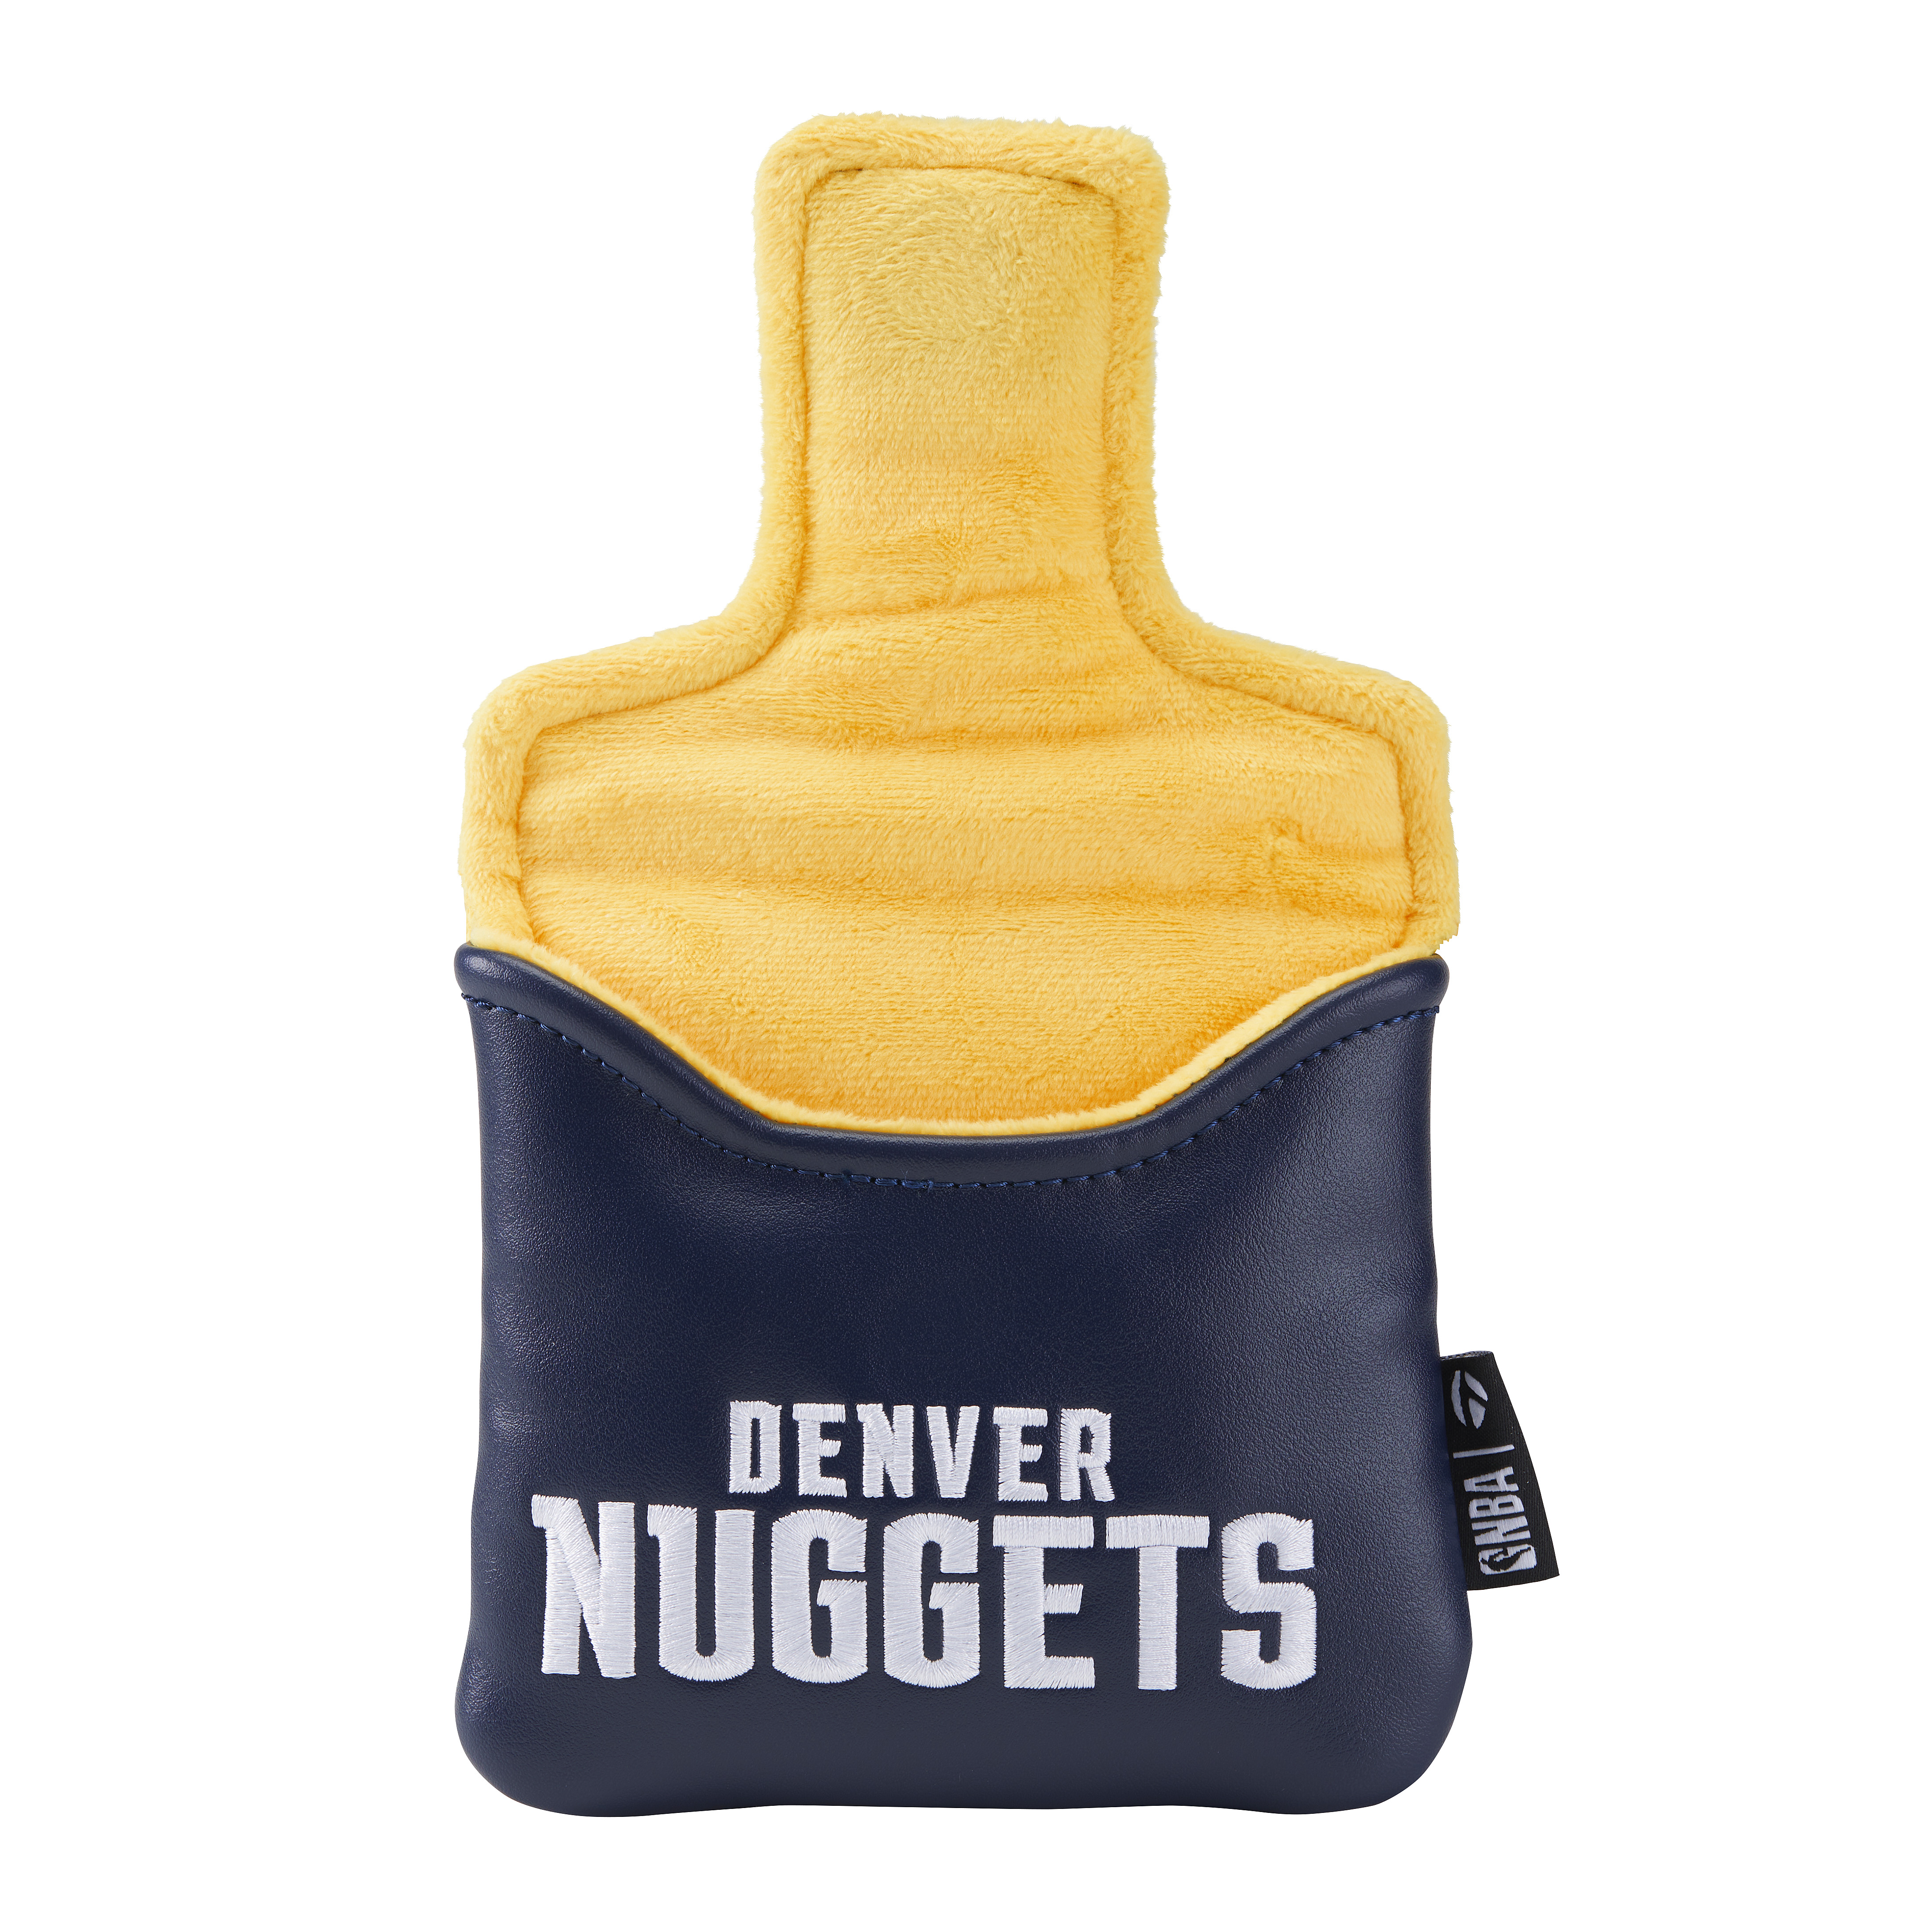 Denver Nuggets Spider Headcover